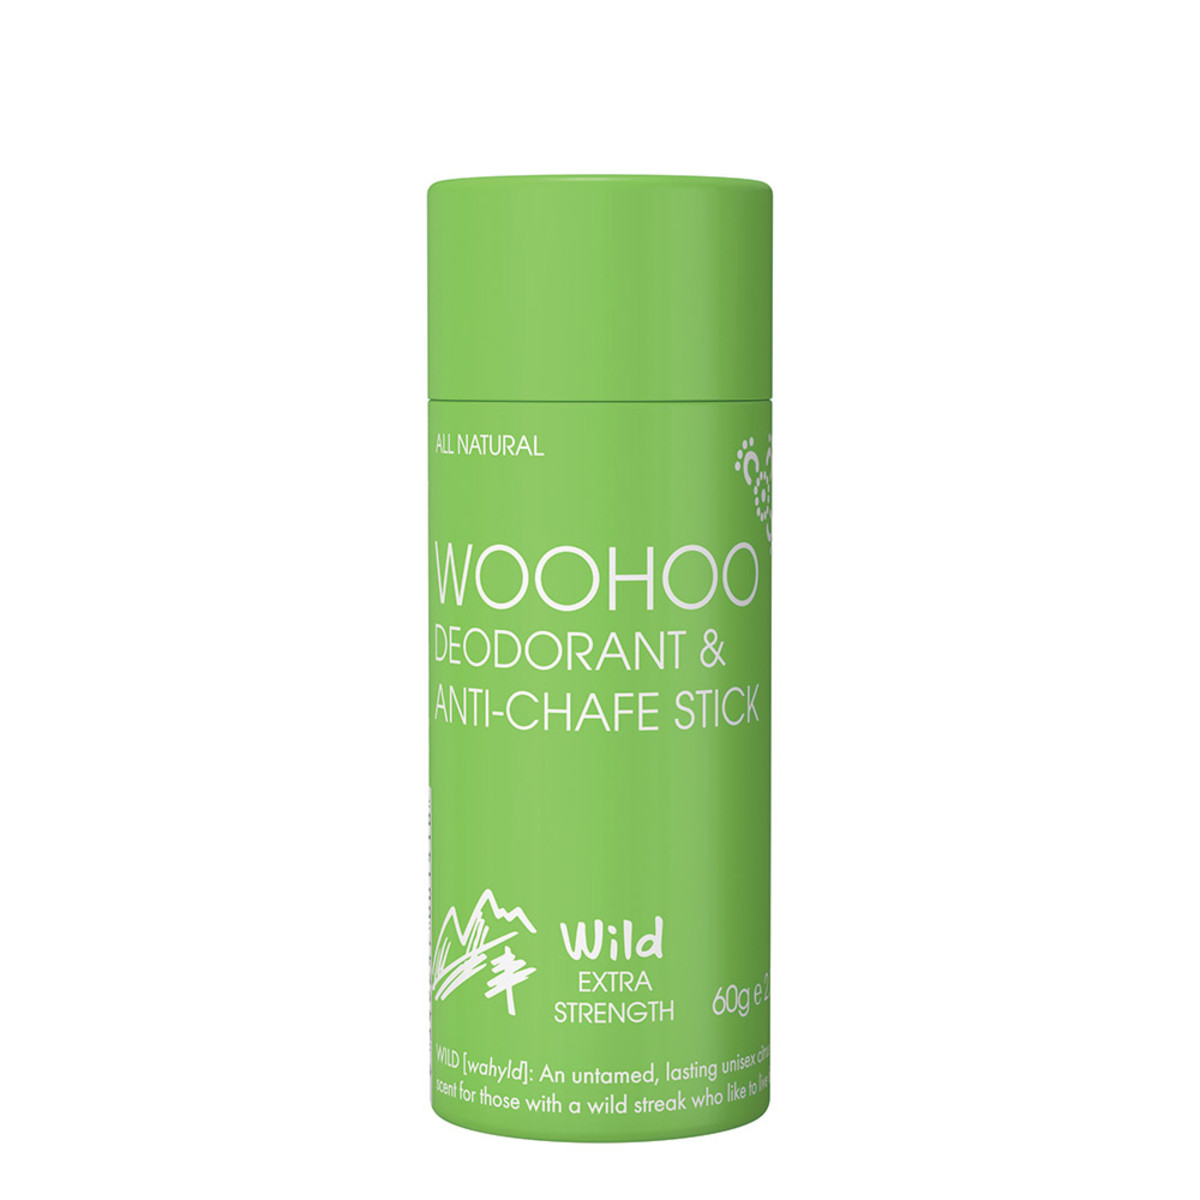 Woohoo Deodorant & Anti-Chafe Stick Wild (Ultra Strength Unisex) 60g